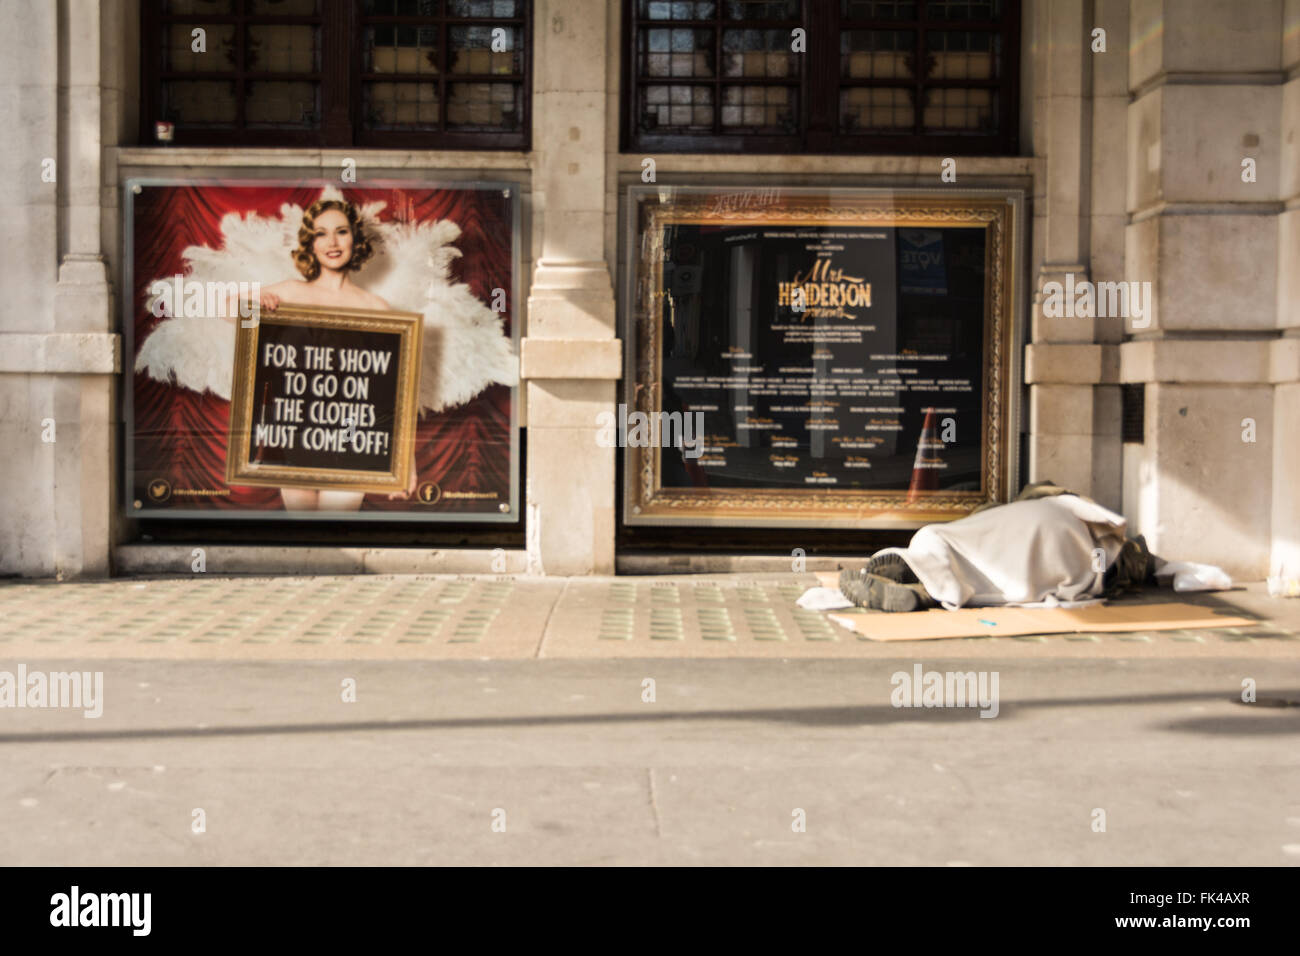 Homeless man sleeping on a doorstep outside a London theatre. Stock Photo